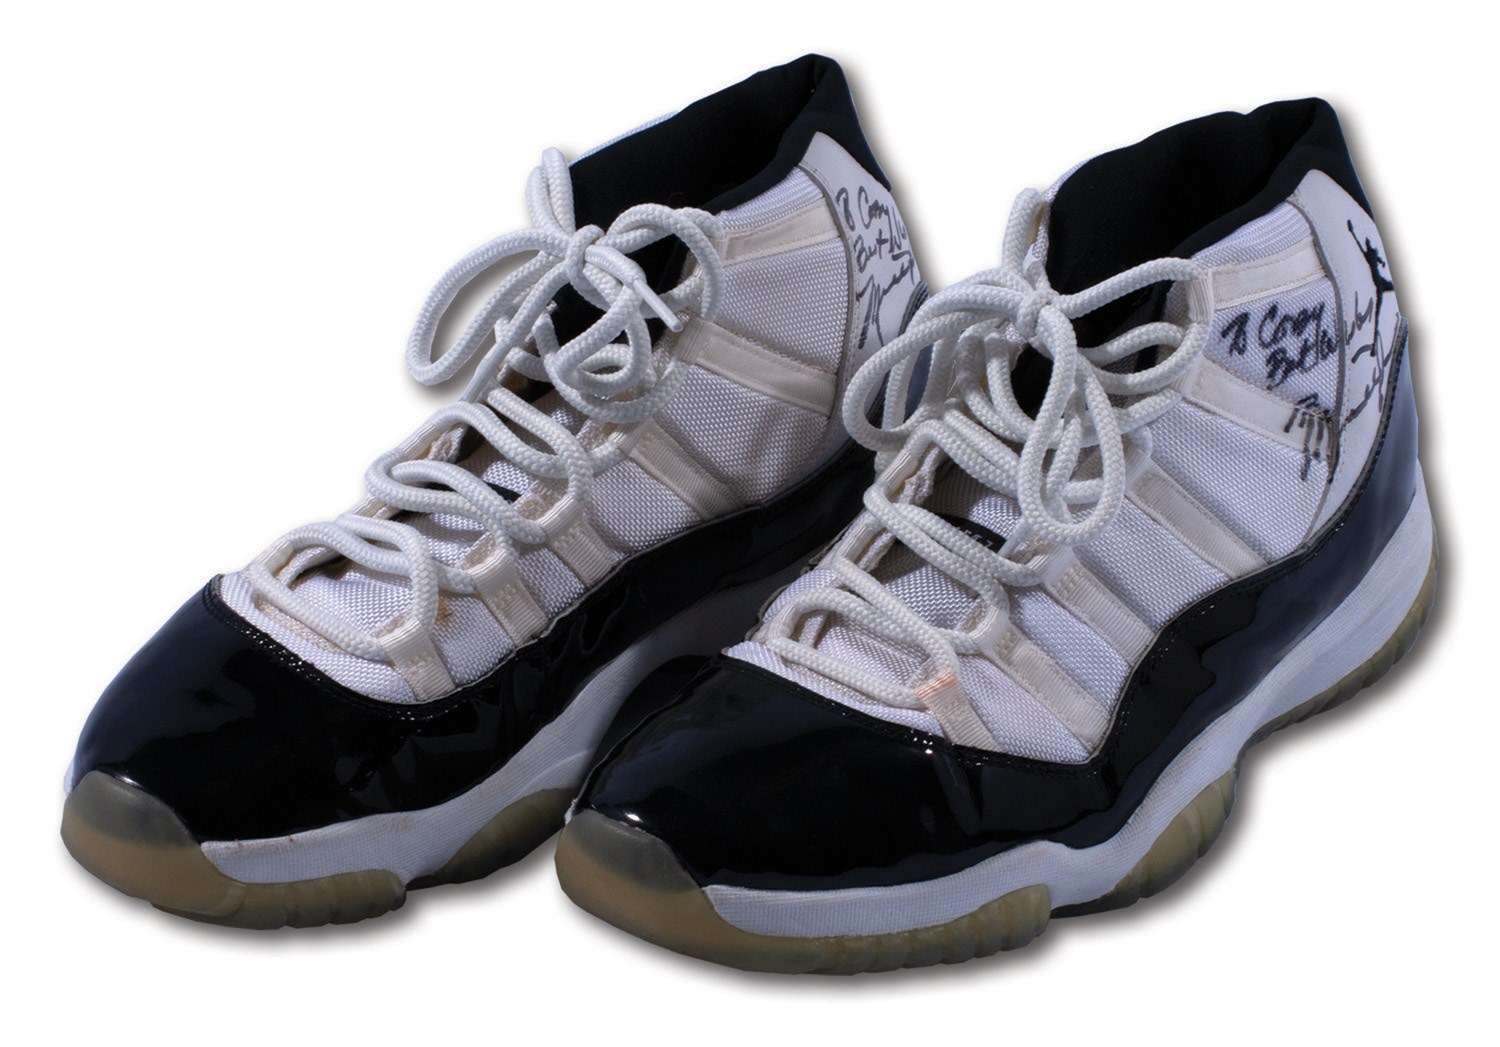 game worn michael jordan shoes